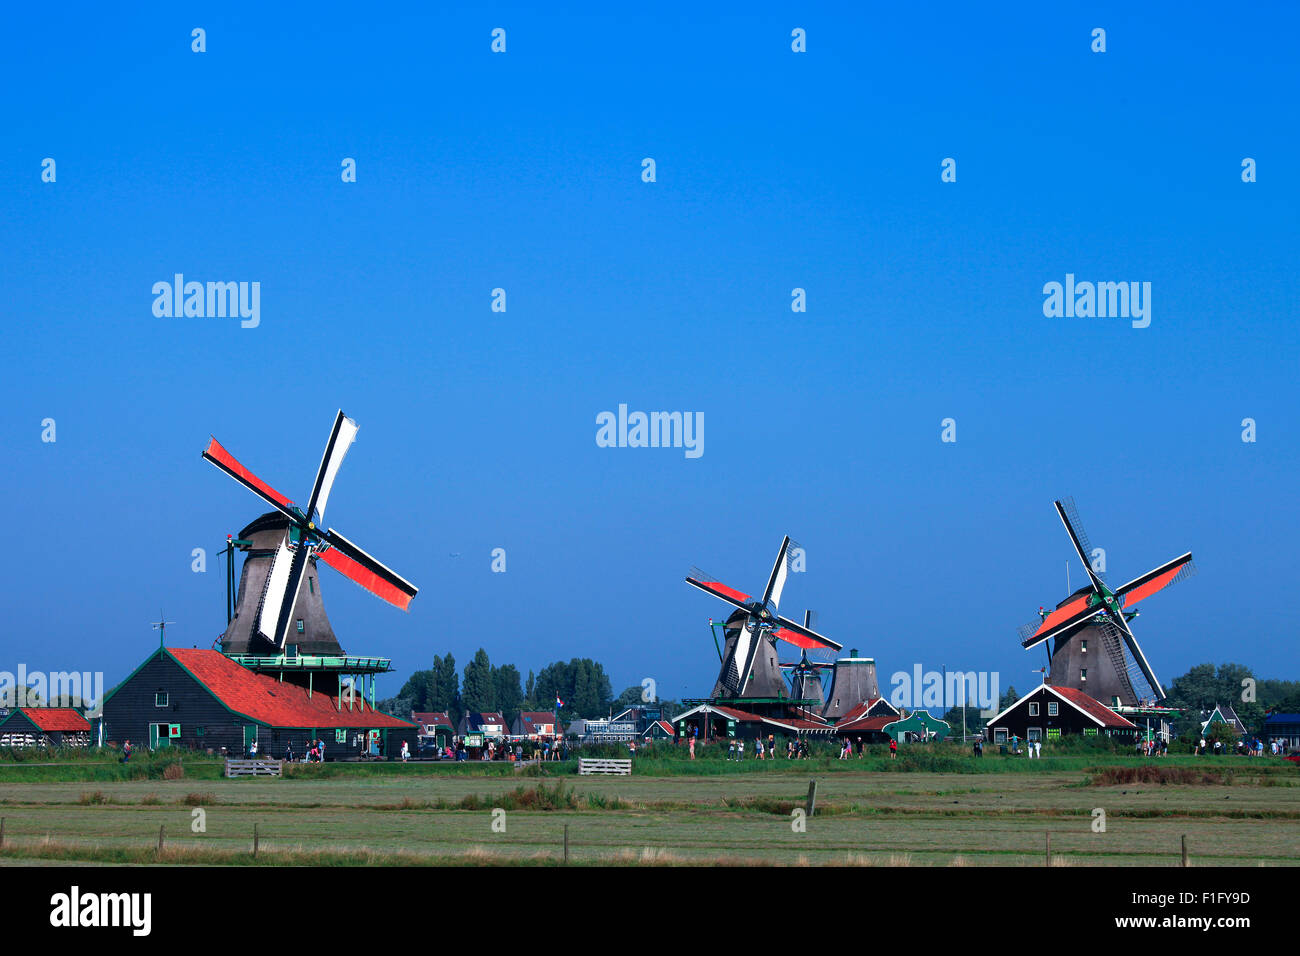 Classic Dutch windmill at Zaanse Schans Stock Photo